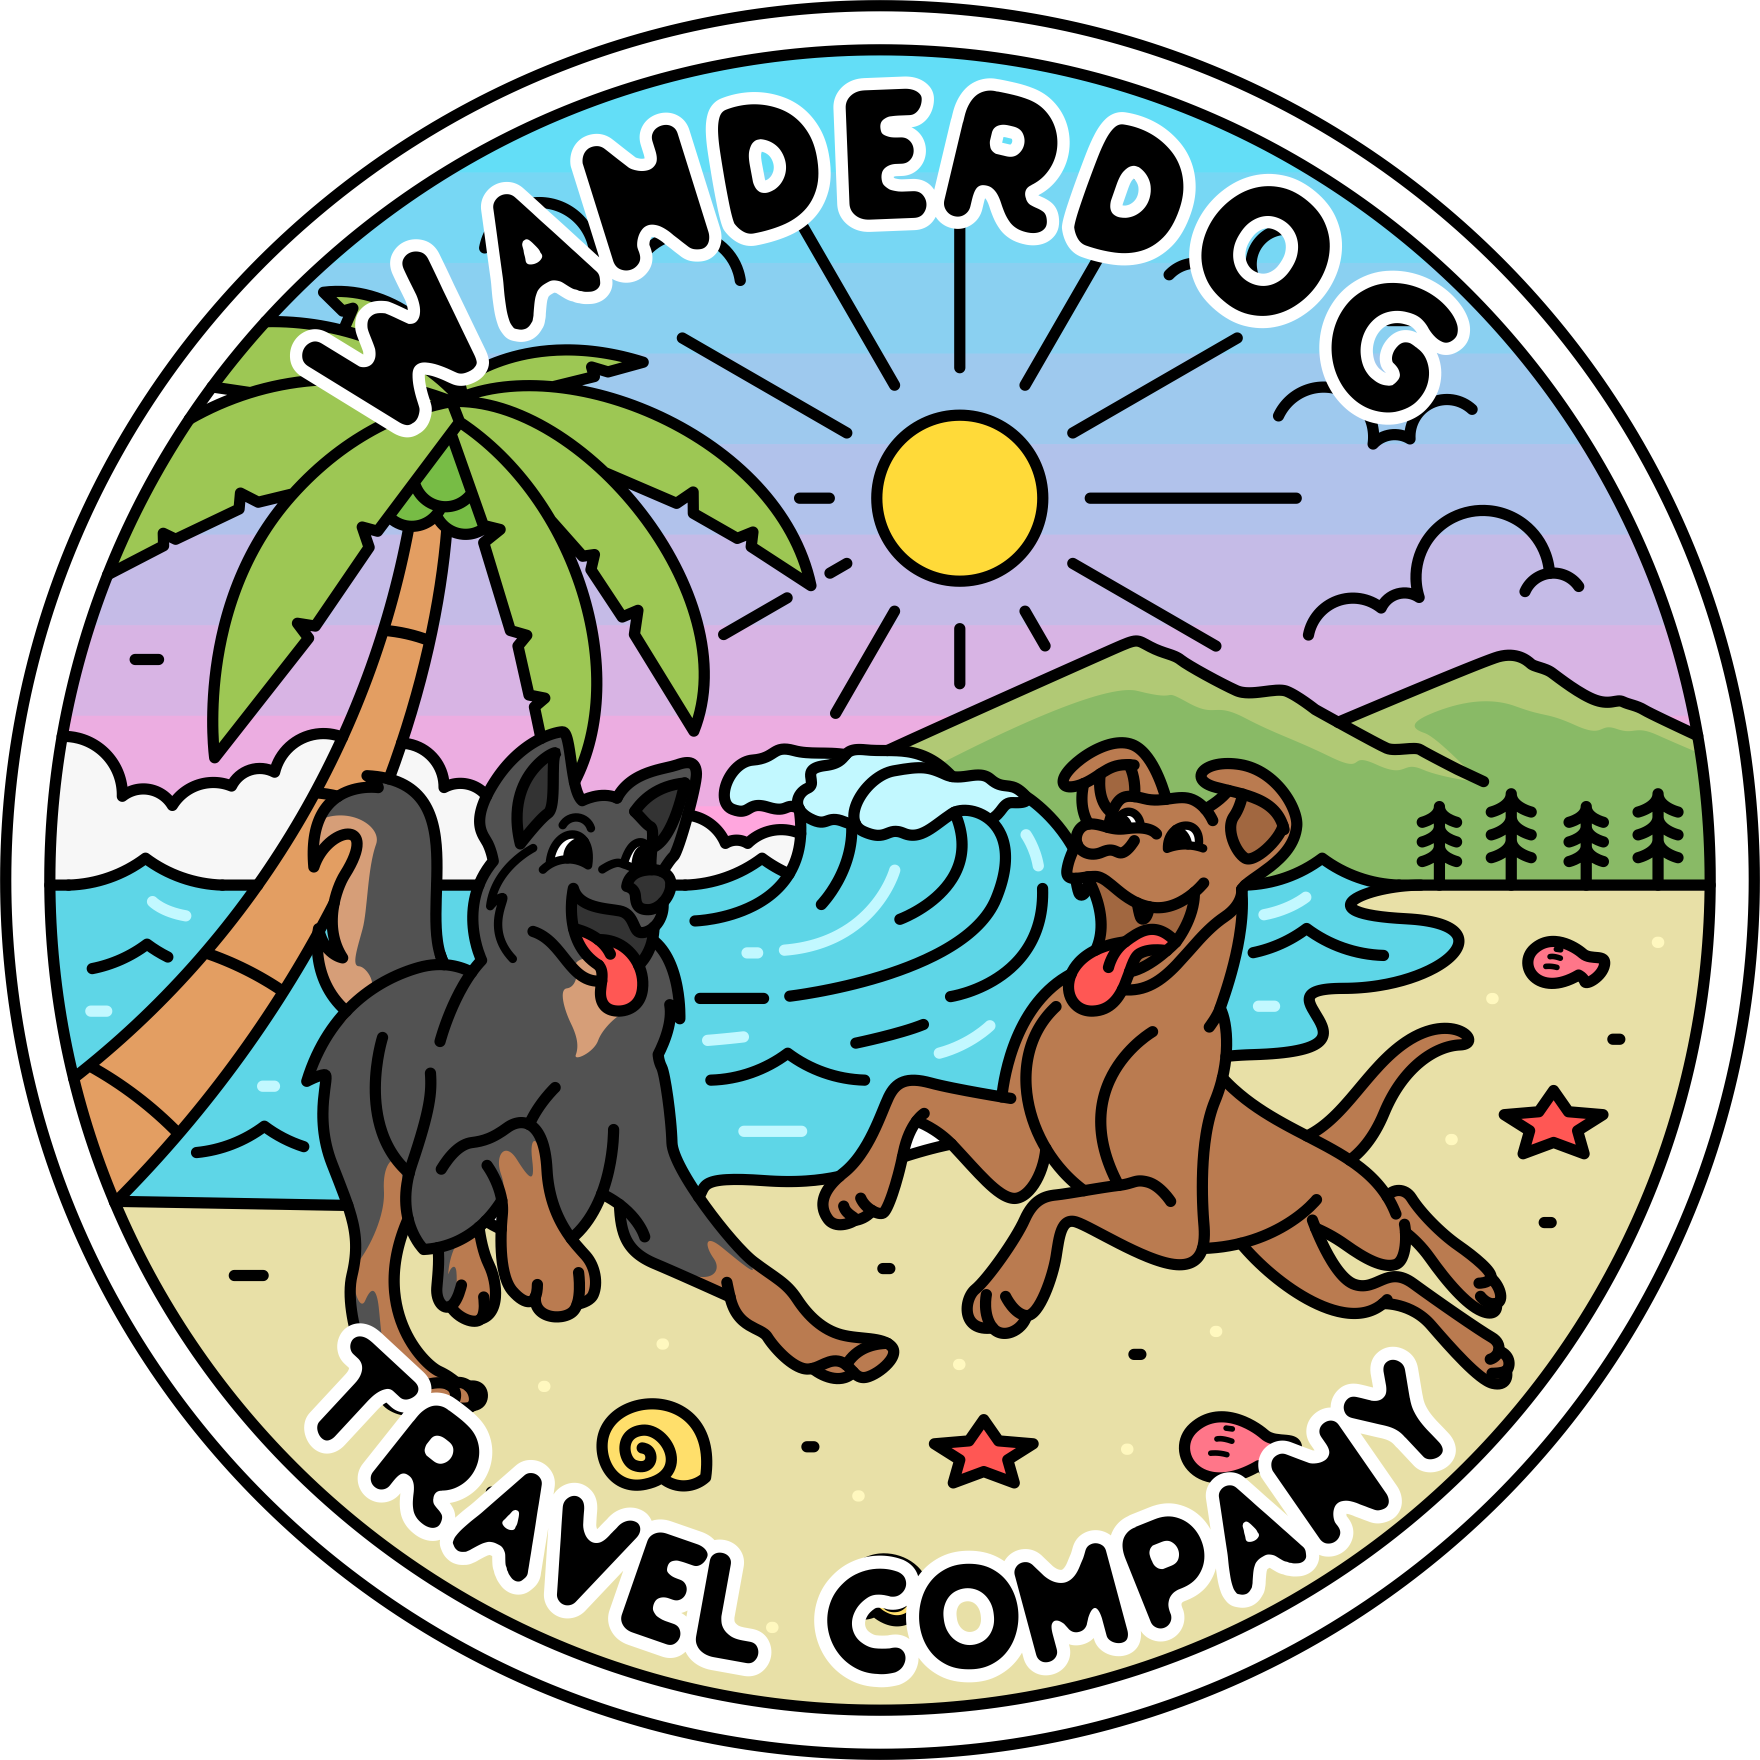 Wanderdog Travel Company